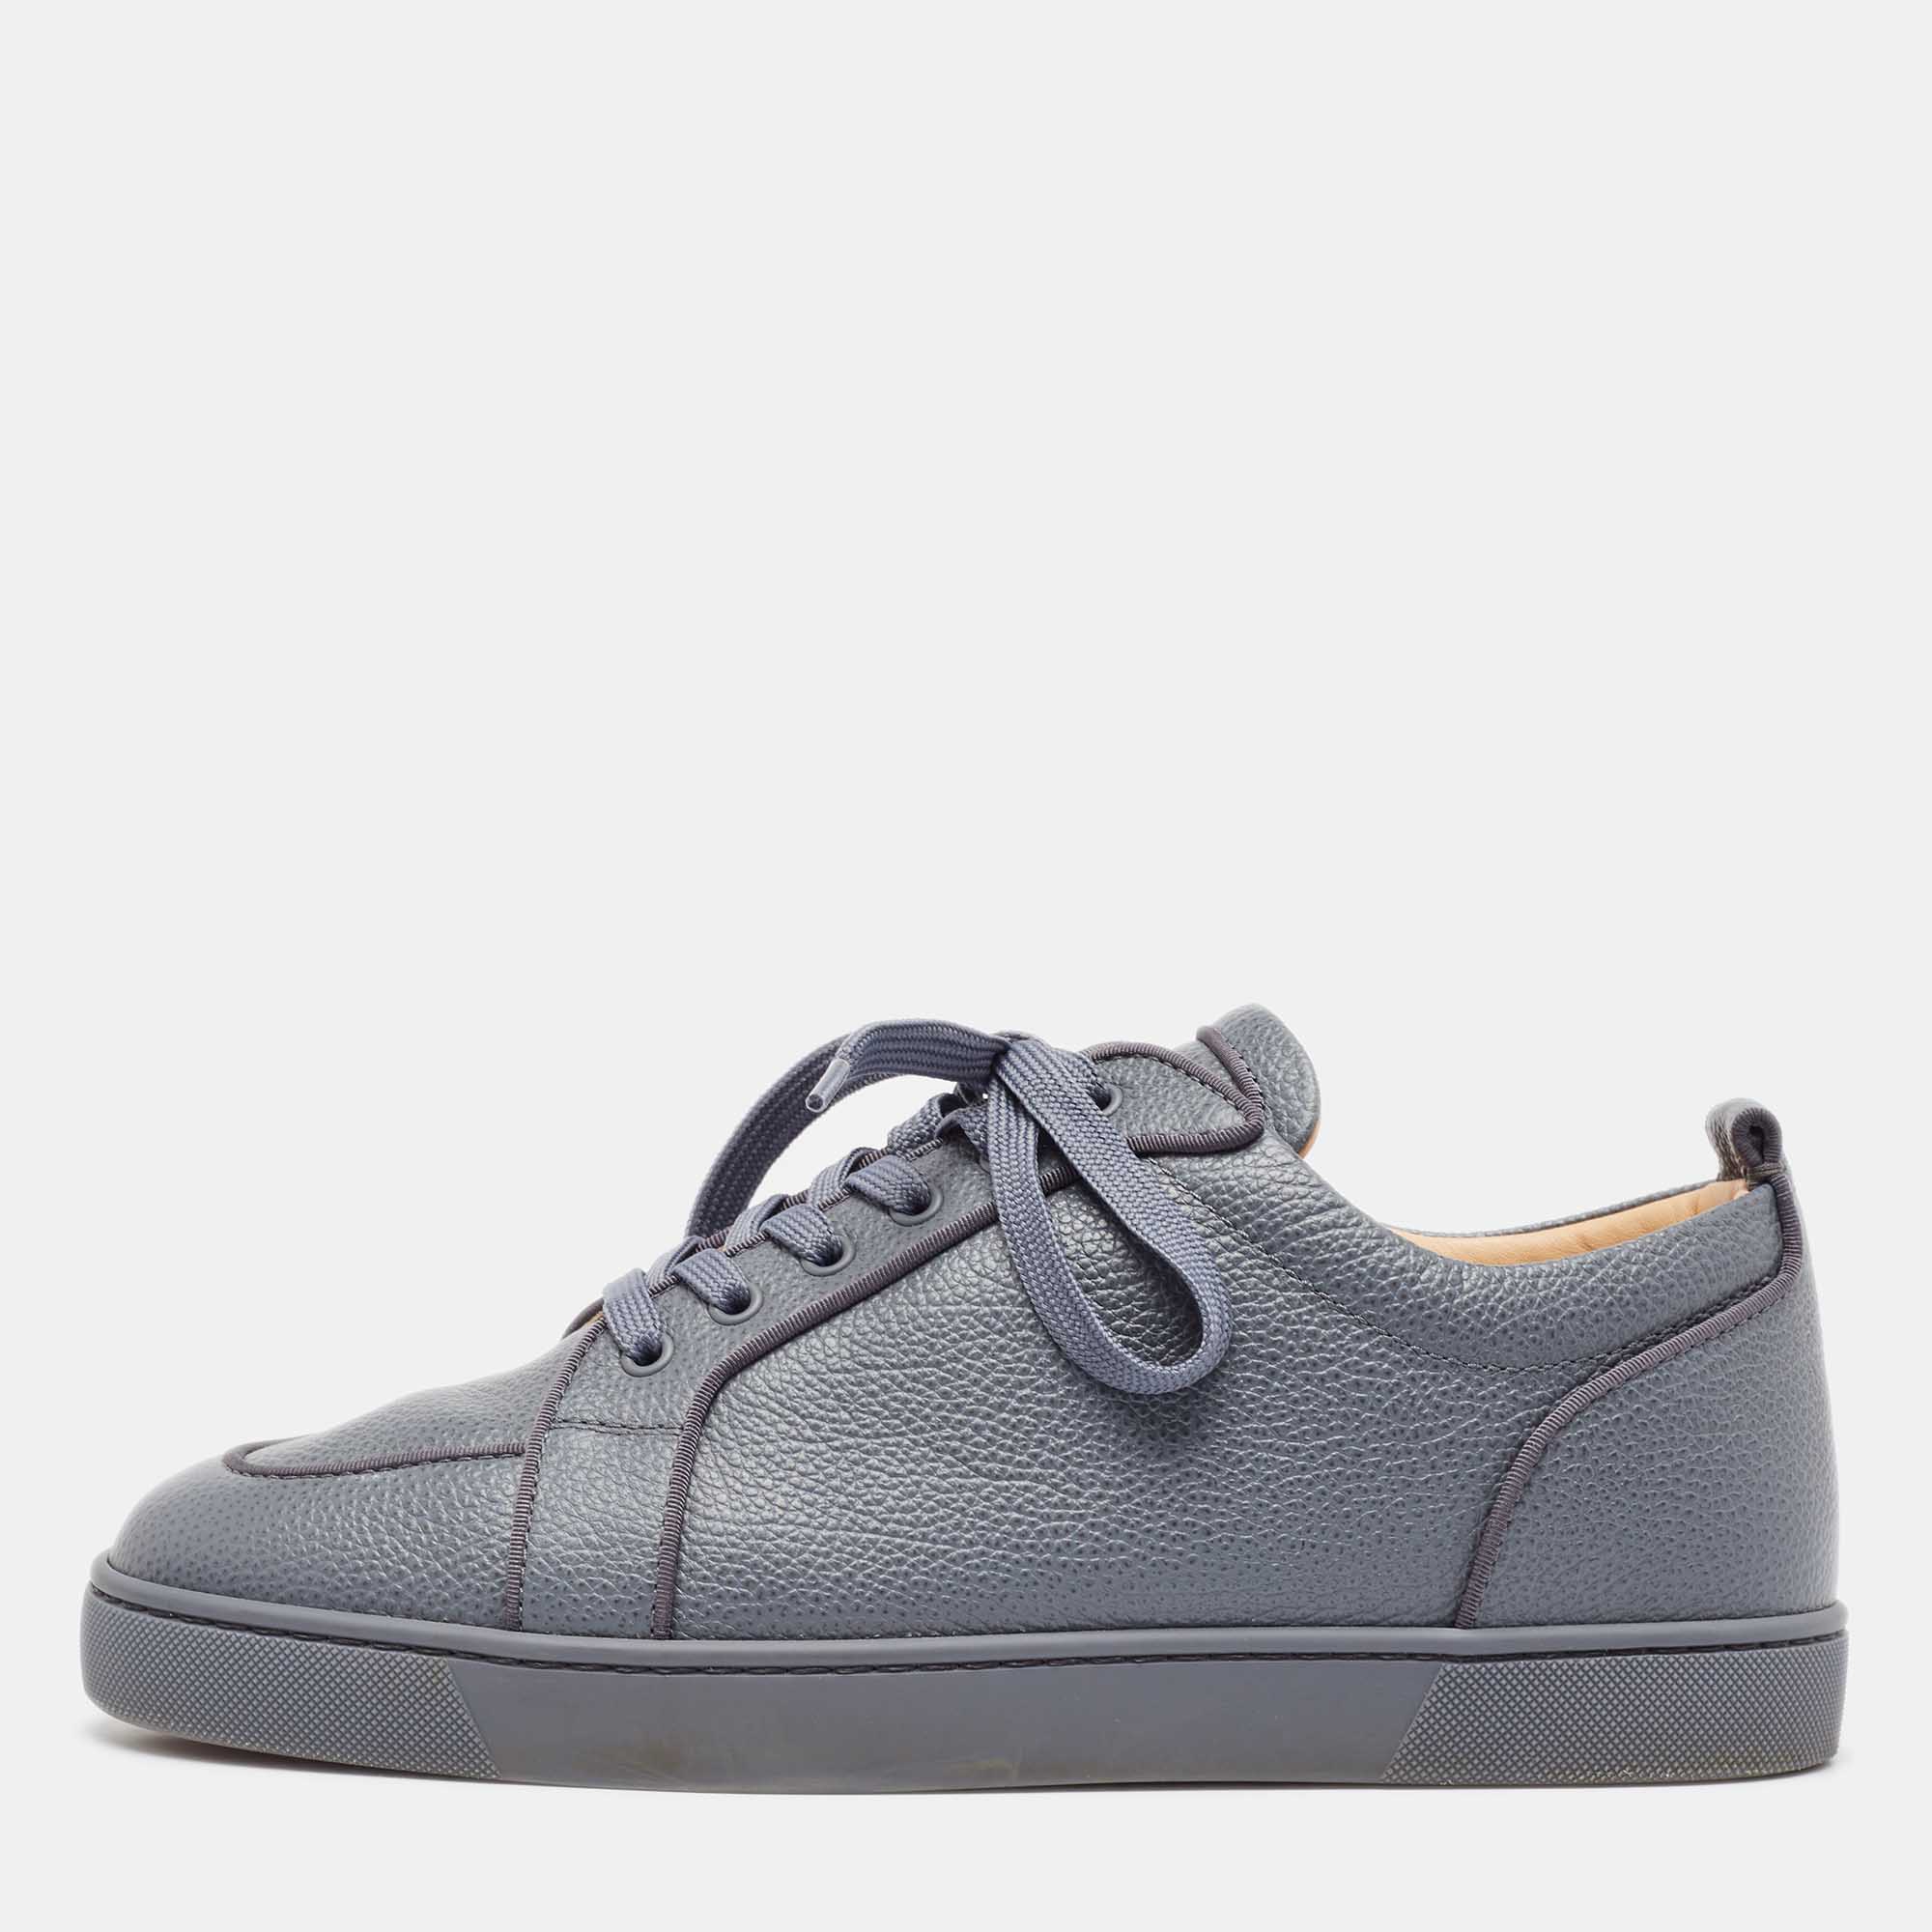 Christian louboutin grey leather rantulow orlato sneakers size 45